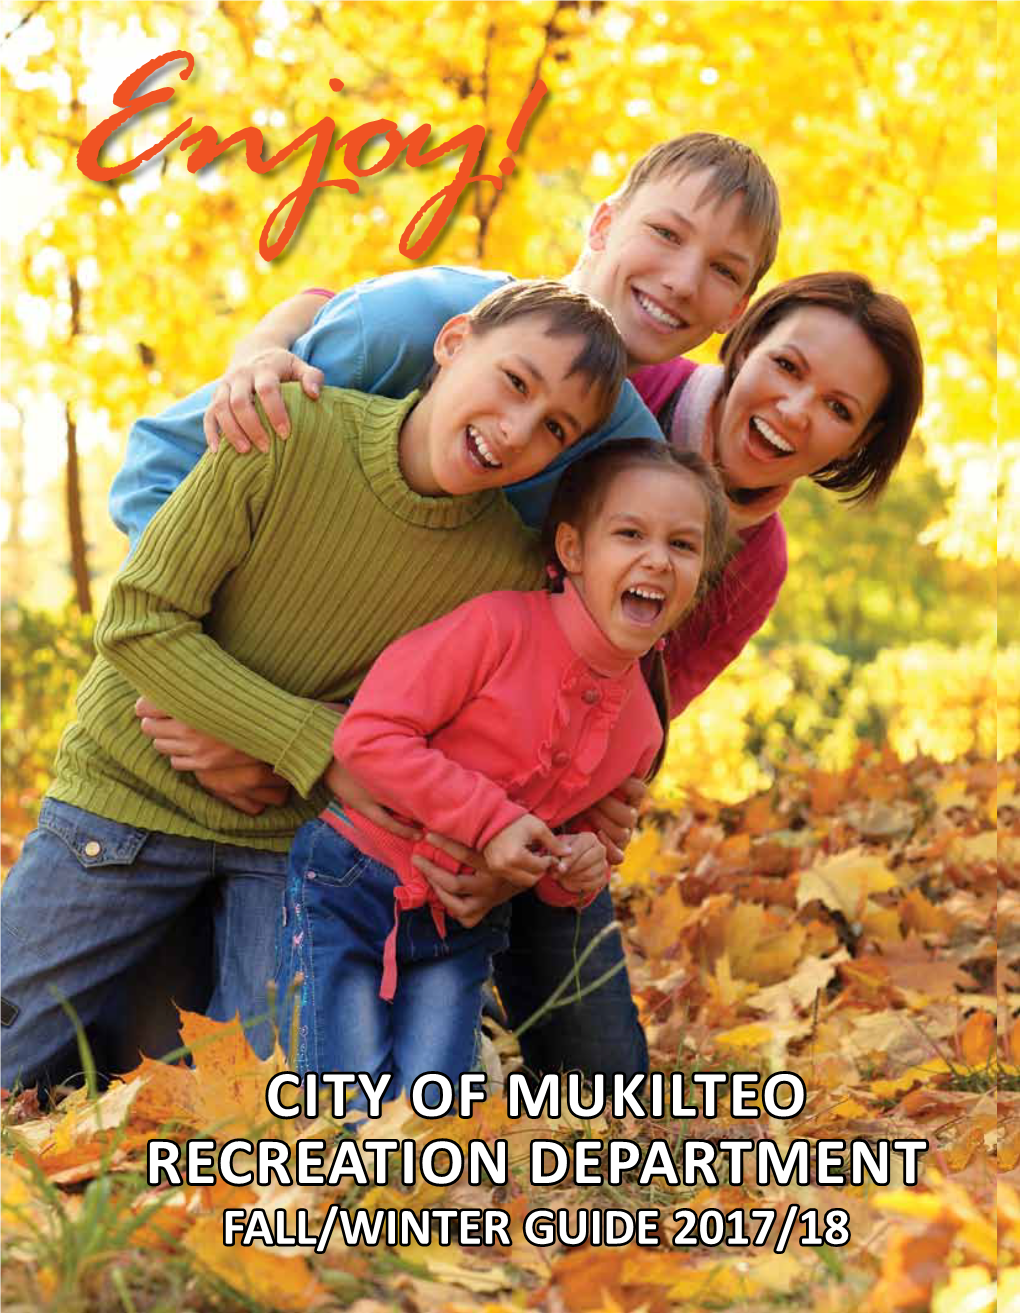 City of Mukilteo Recreation Department